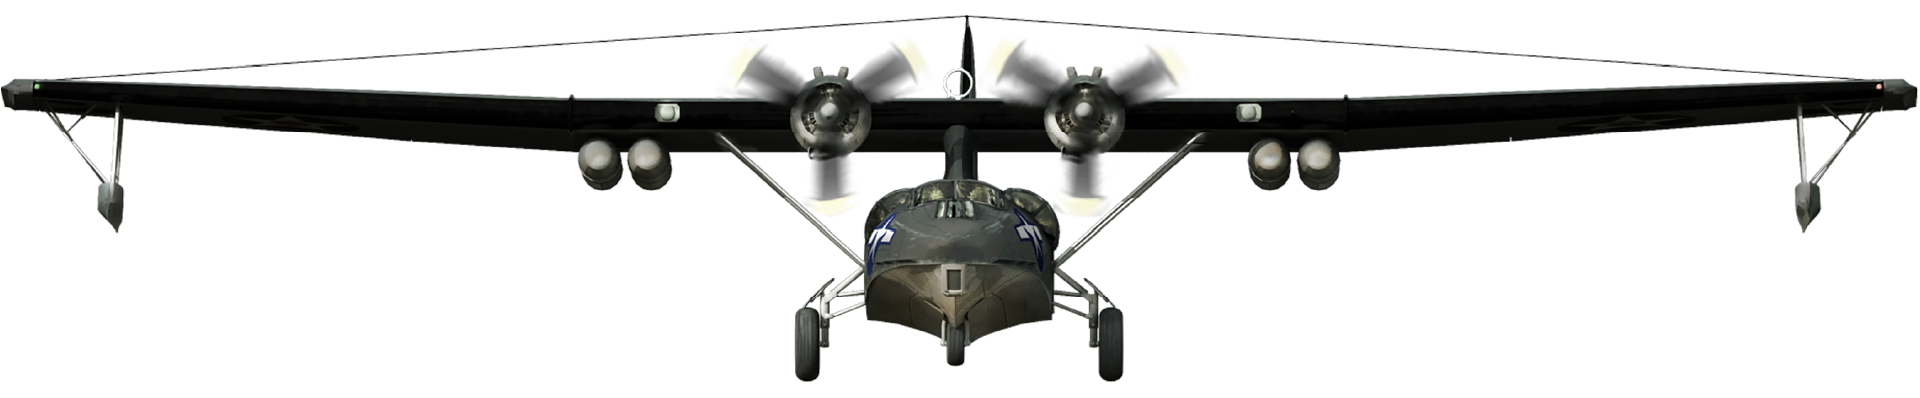 PBY-5A